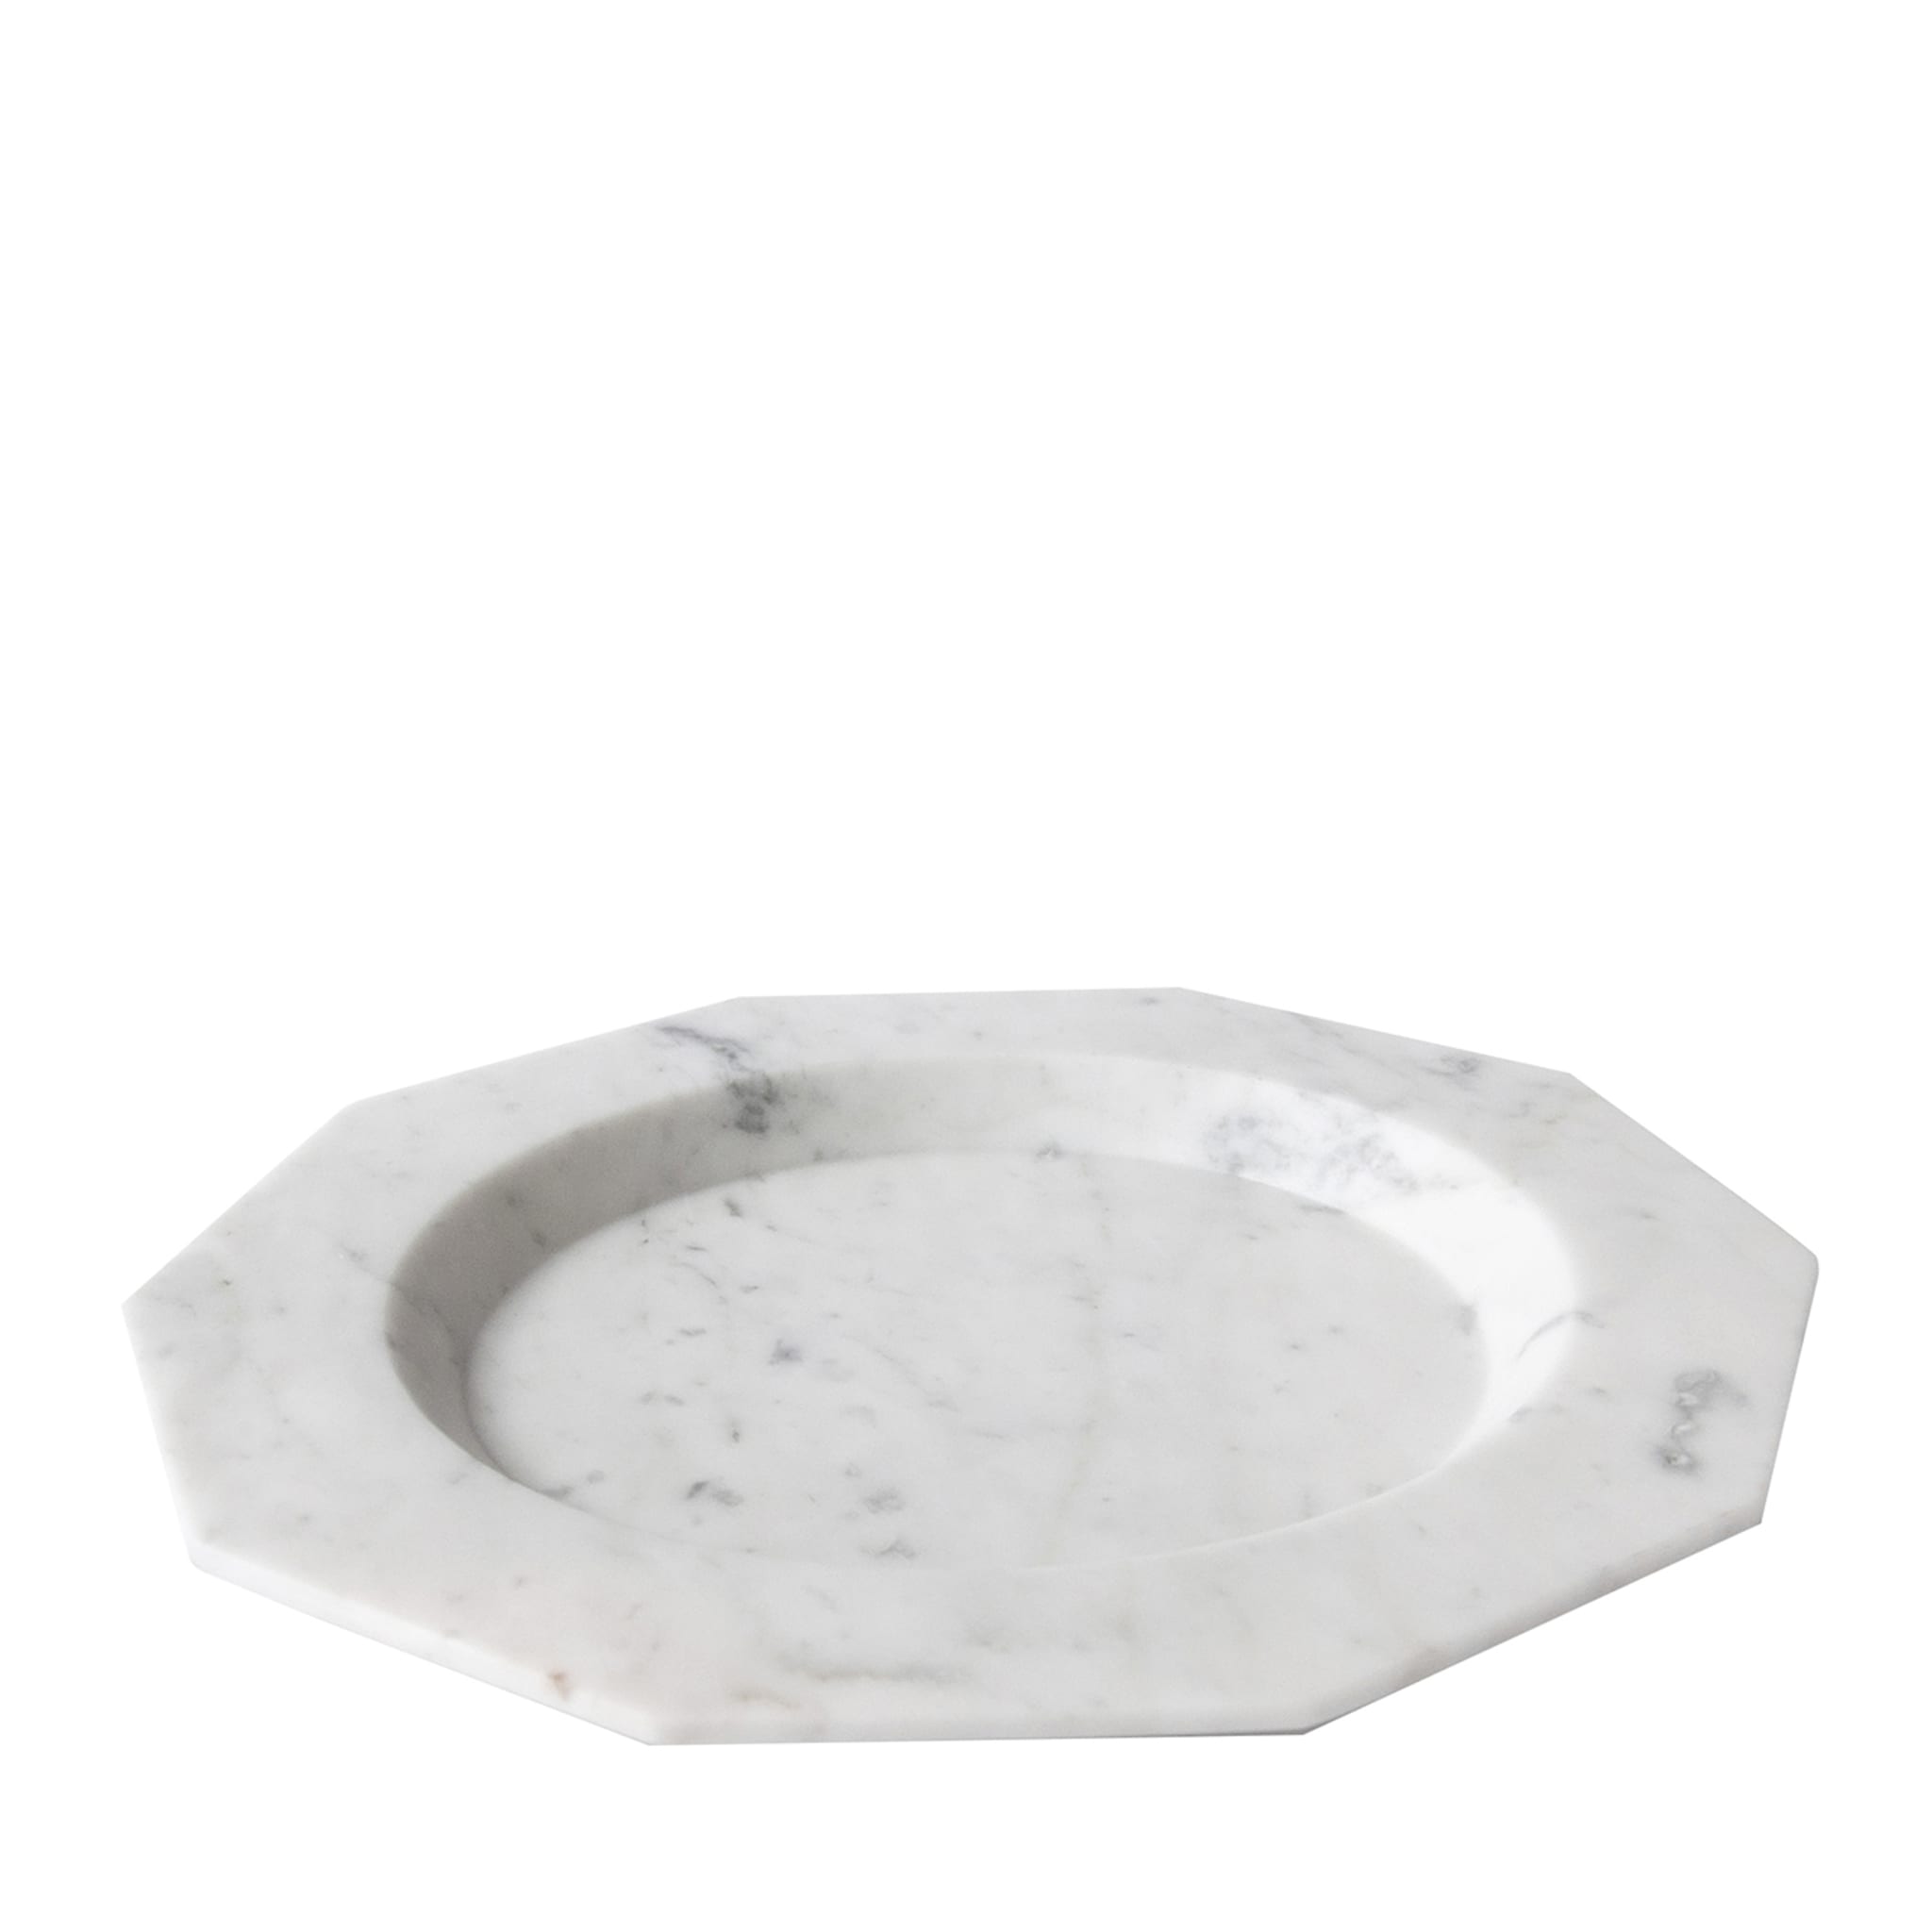 Dinner Plate in white Carrara marble - Main view